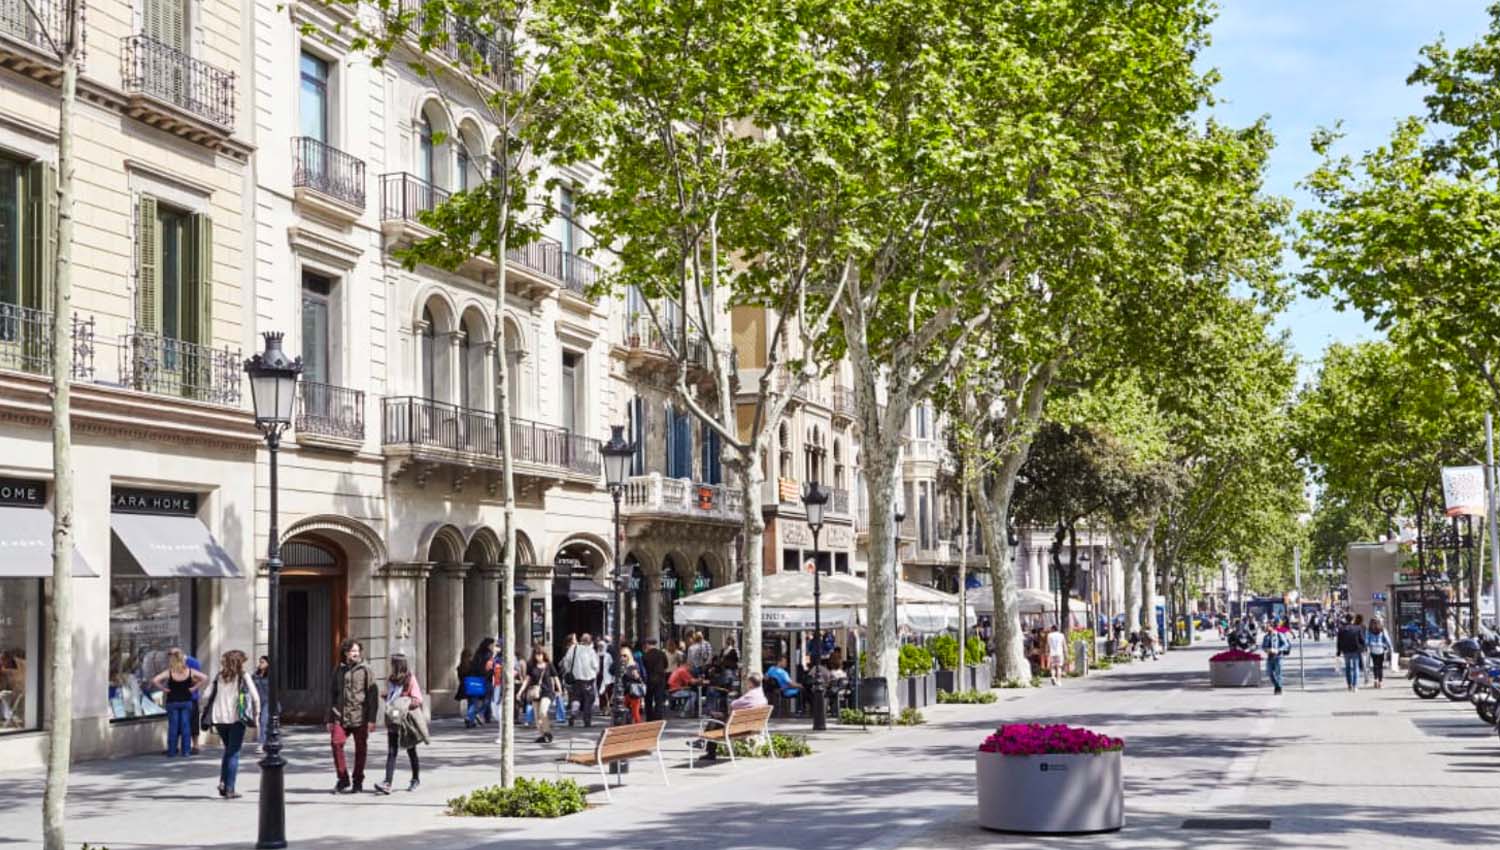 Passeige de Gracia - Shopping strees in Barcelona